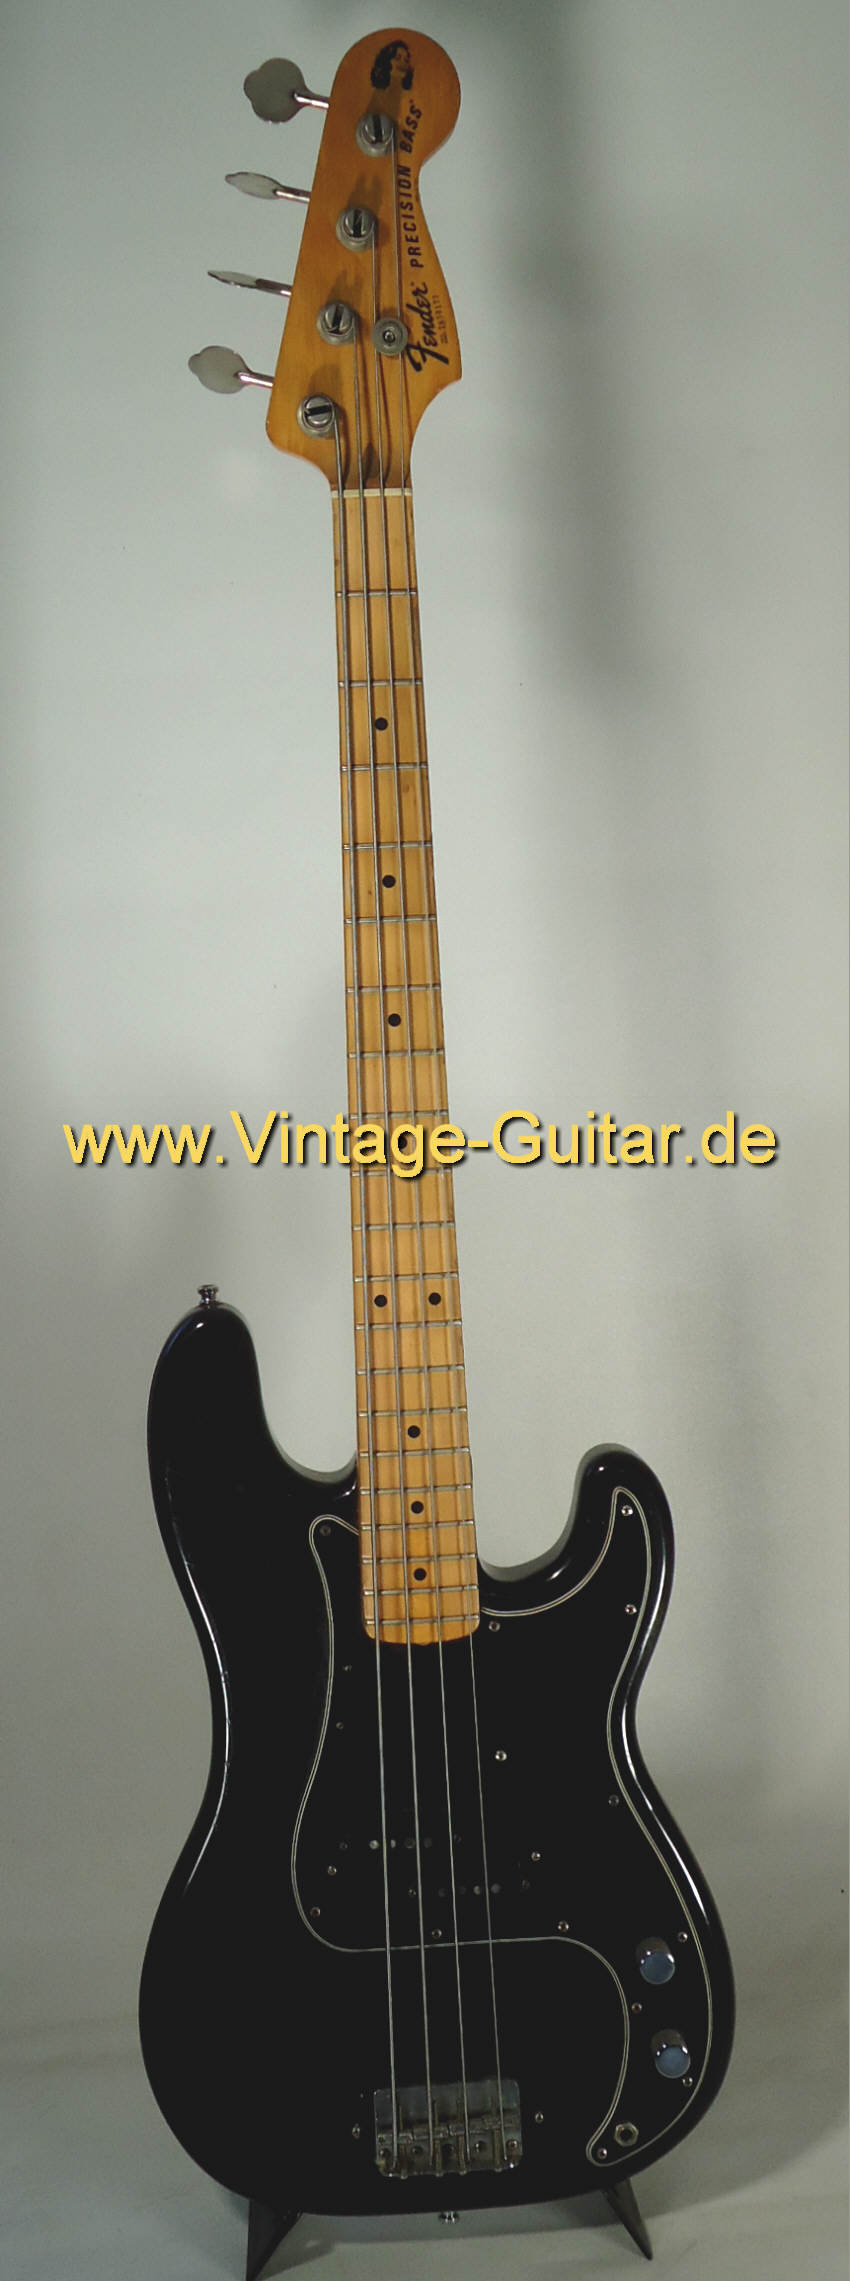 Fender Precision Bass 1976 black a.jpg